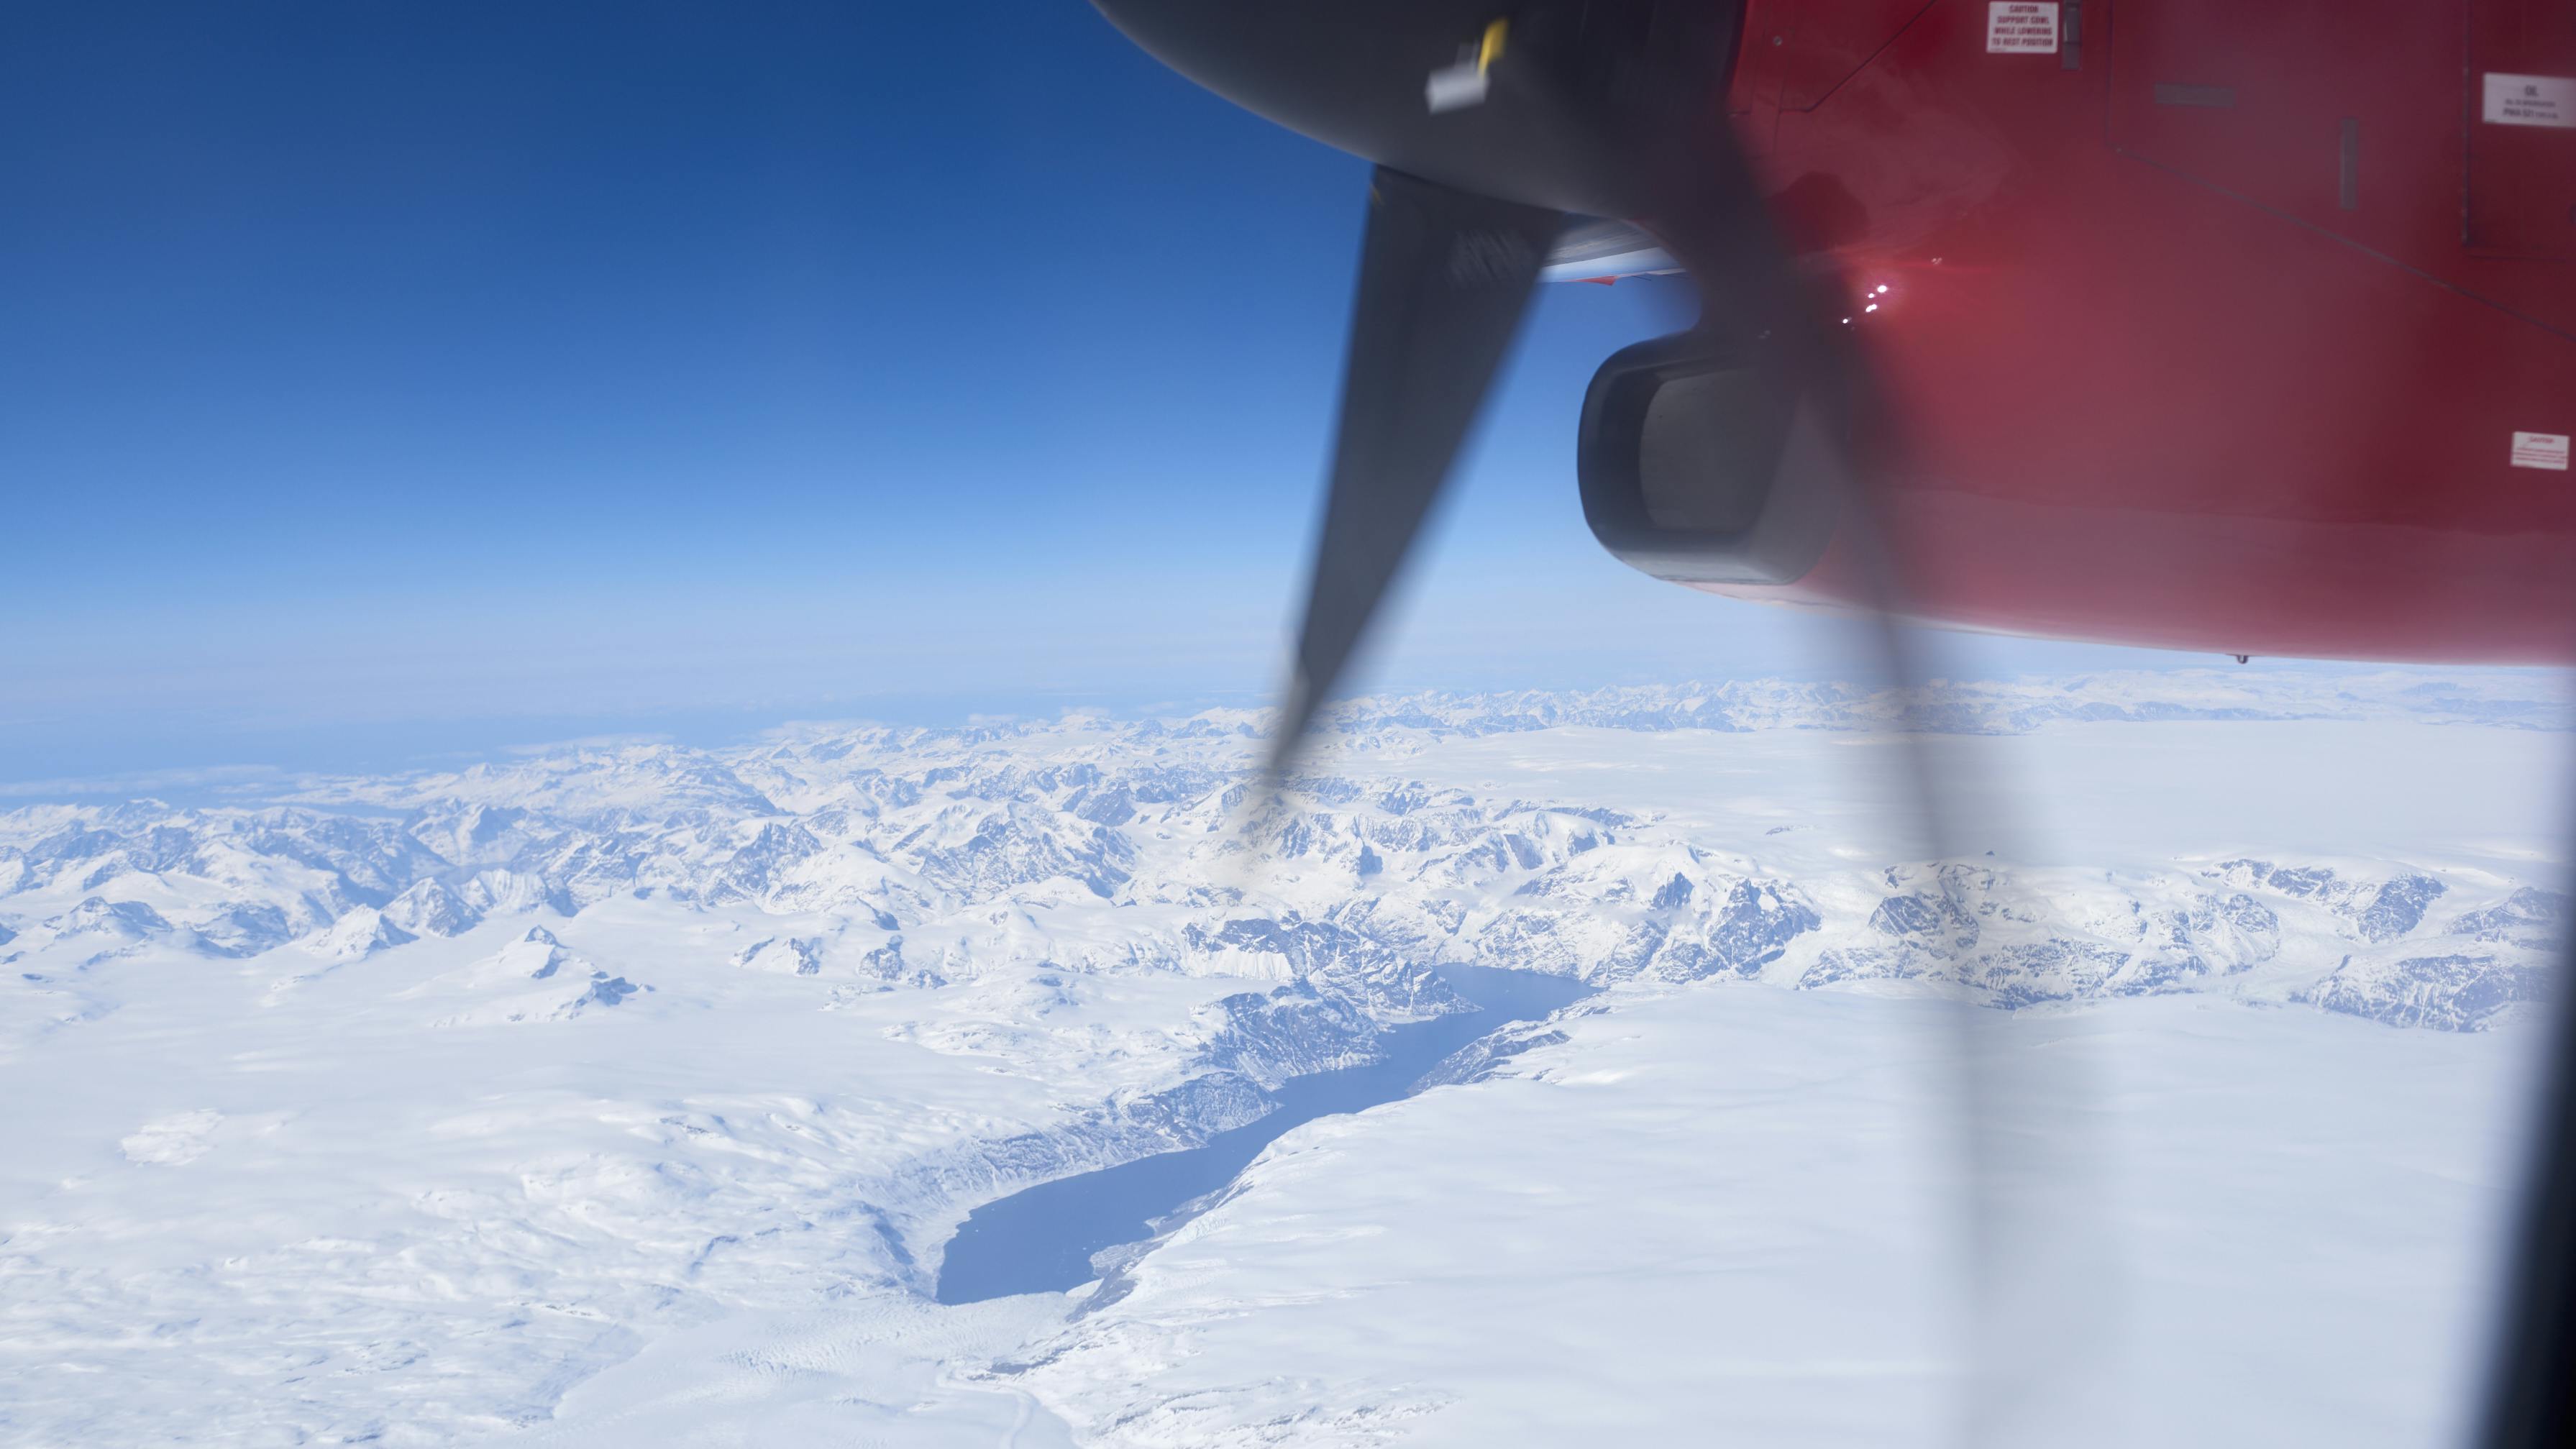 Glimt fra en reportagetur til Grønland i maj 2017